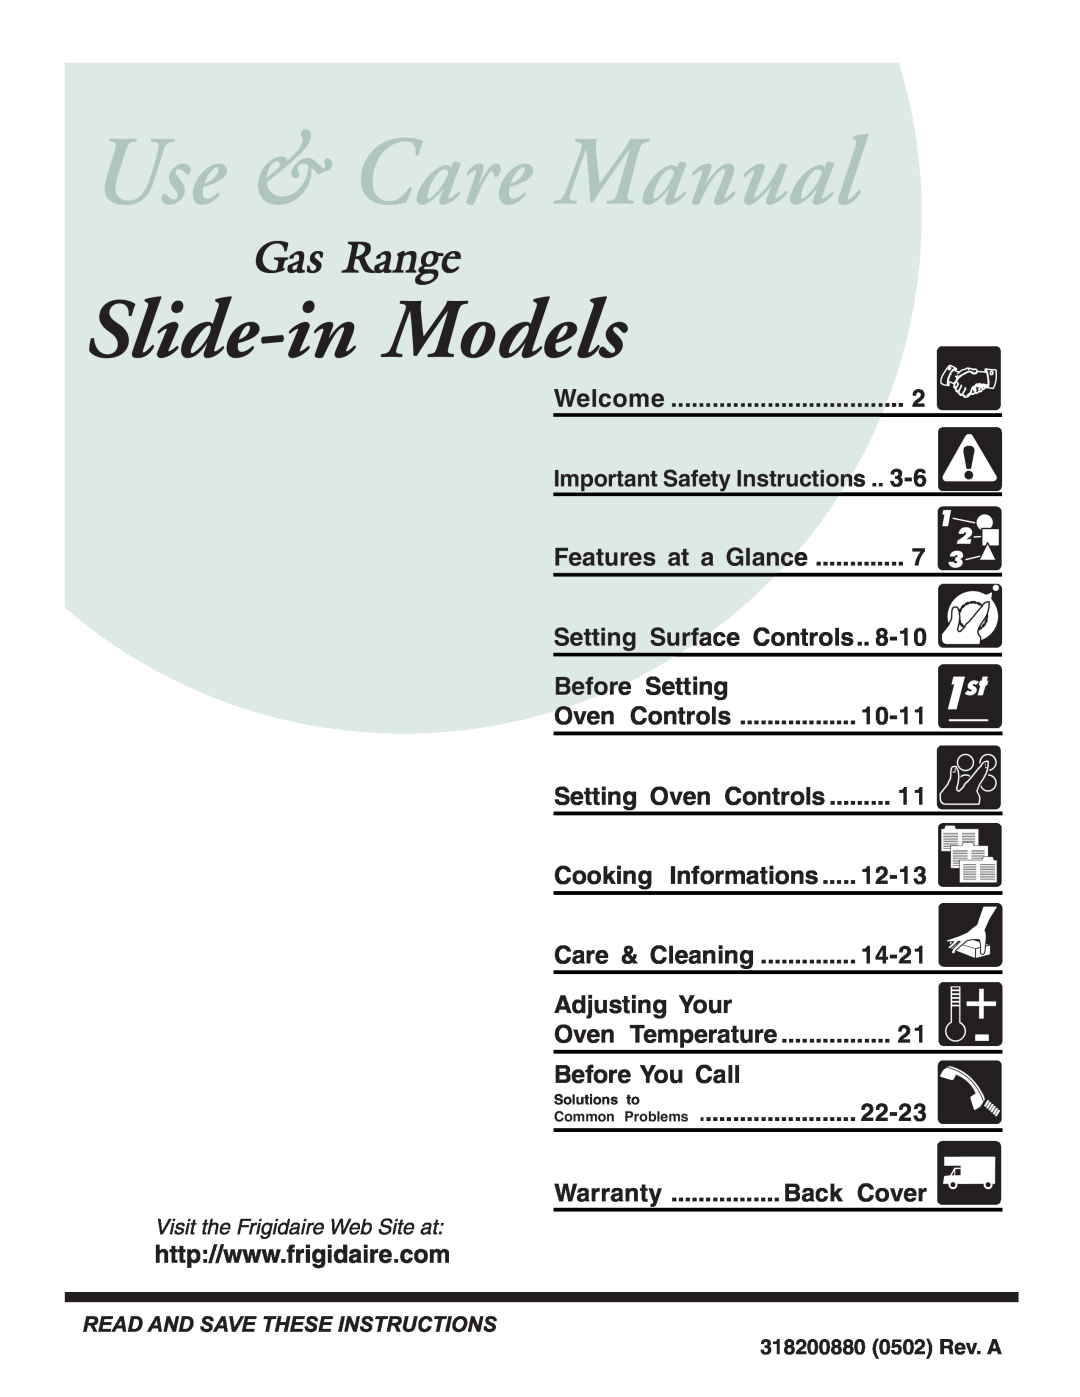 Frigidaire 318200880 manual Slide-in Models, Gas Range 